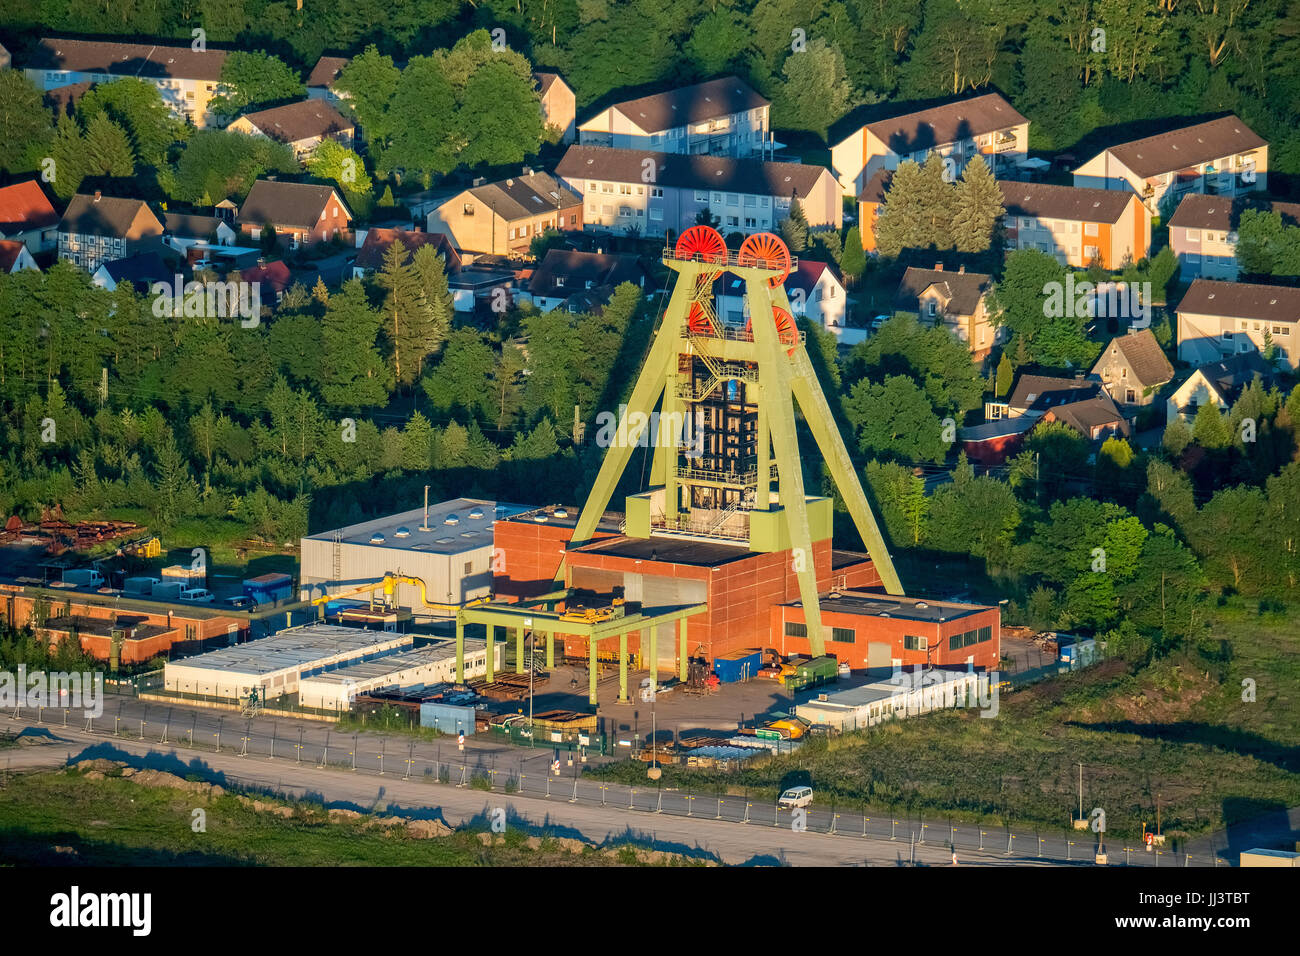 Winding tower of the former coal mine Haus Aden, evening light, Bergkamen, Ruhr area, North Rhine-Westphalia, Germany Stock Photo